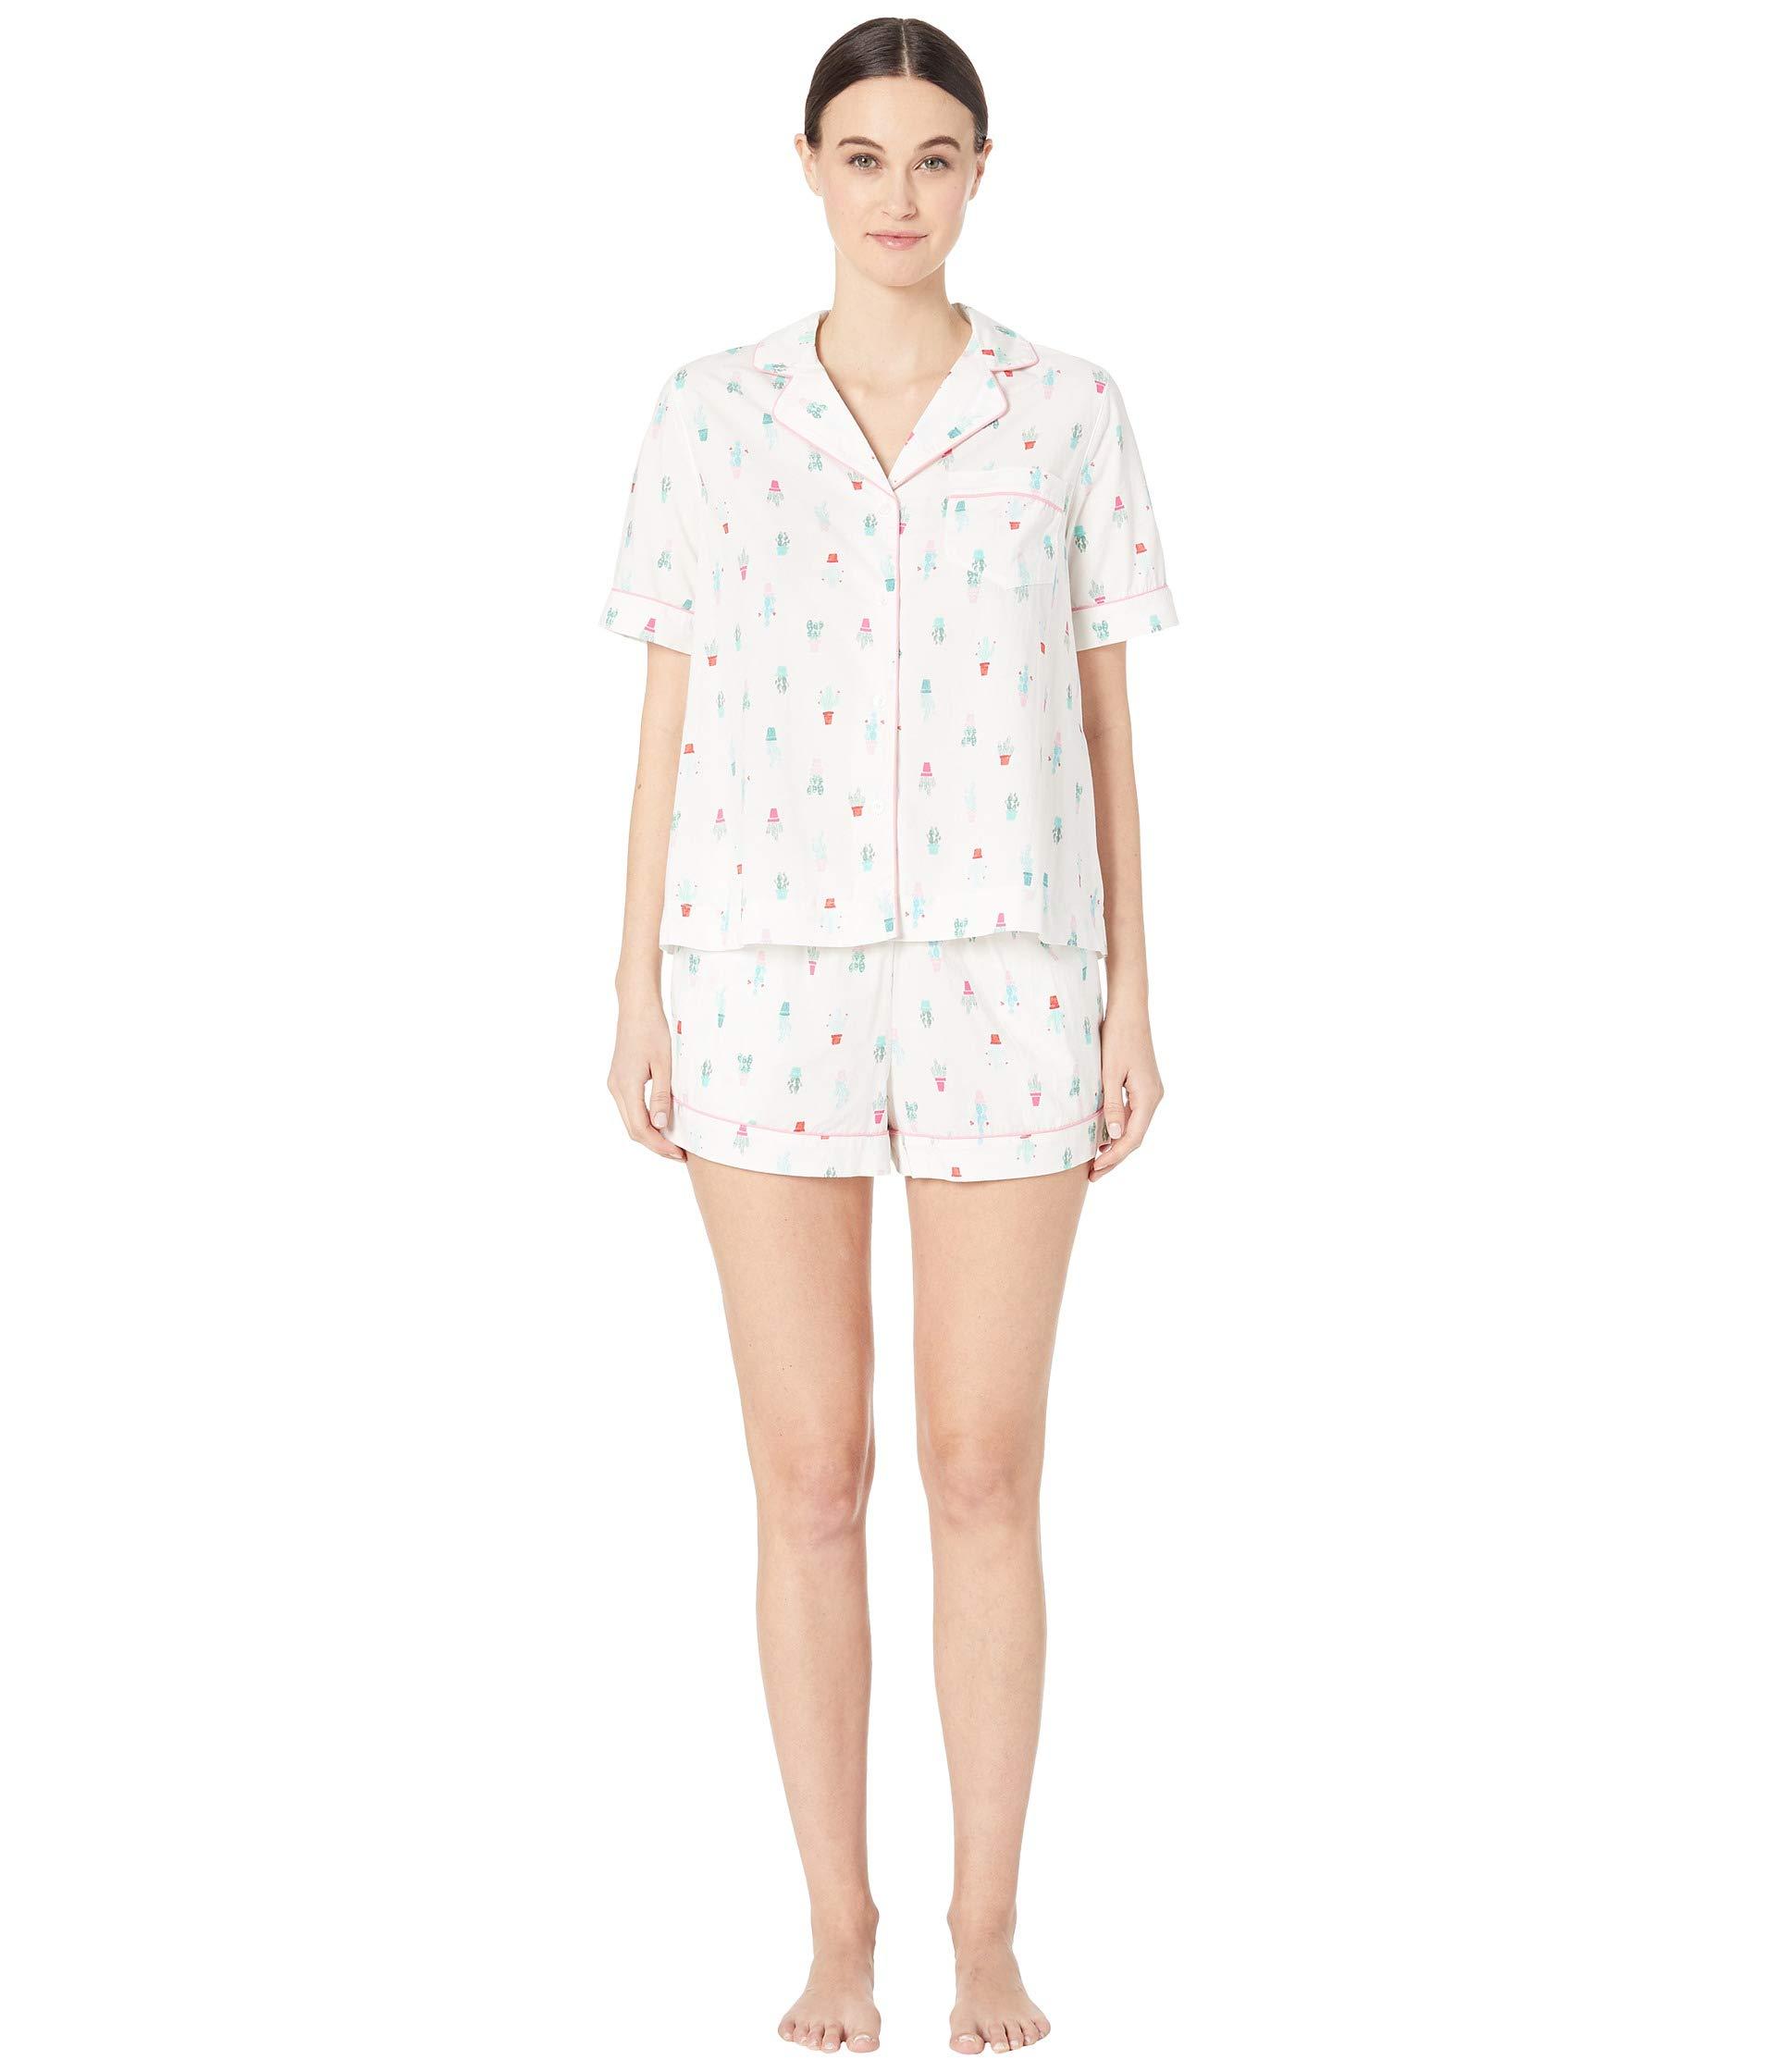 Kate Spade Cotton Lawn Short Pajama Set in White - Lyst